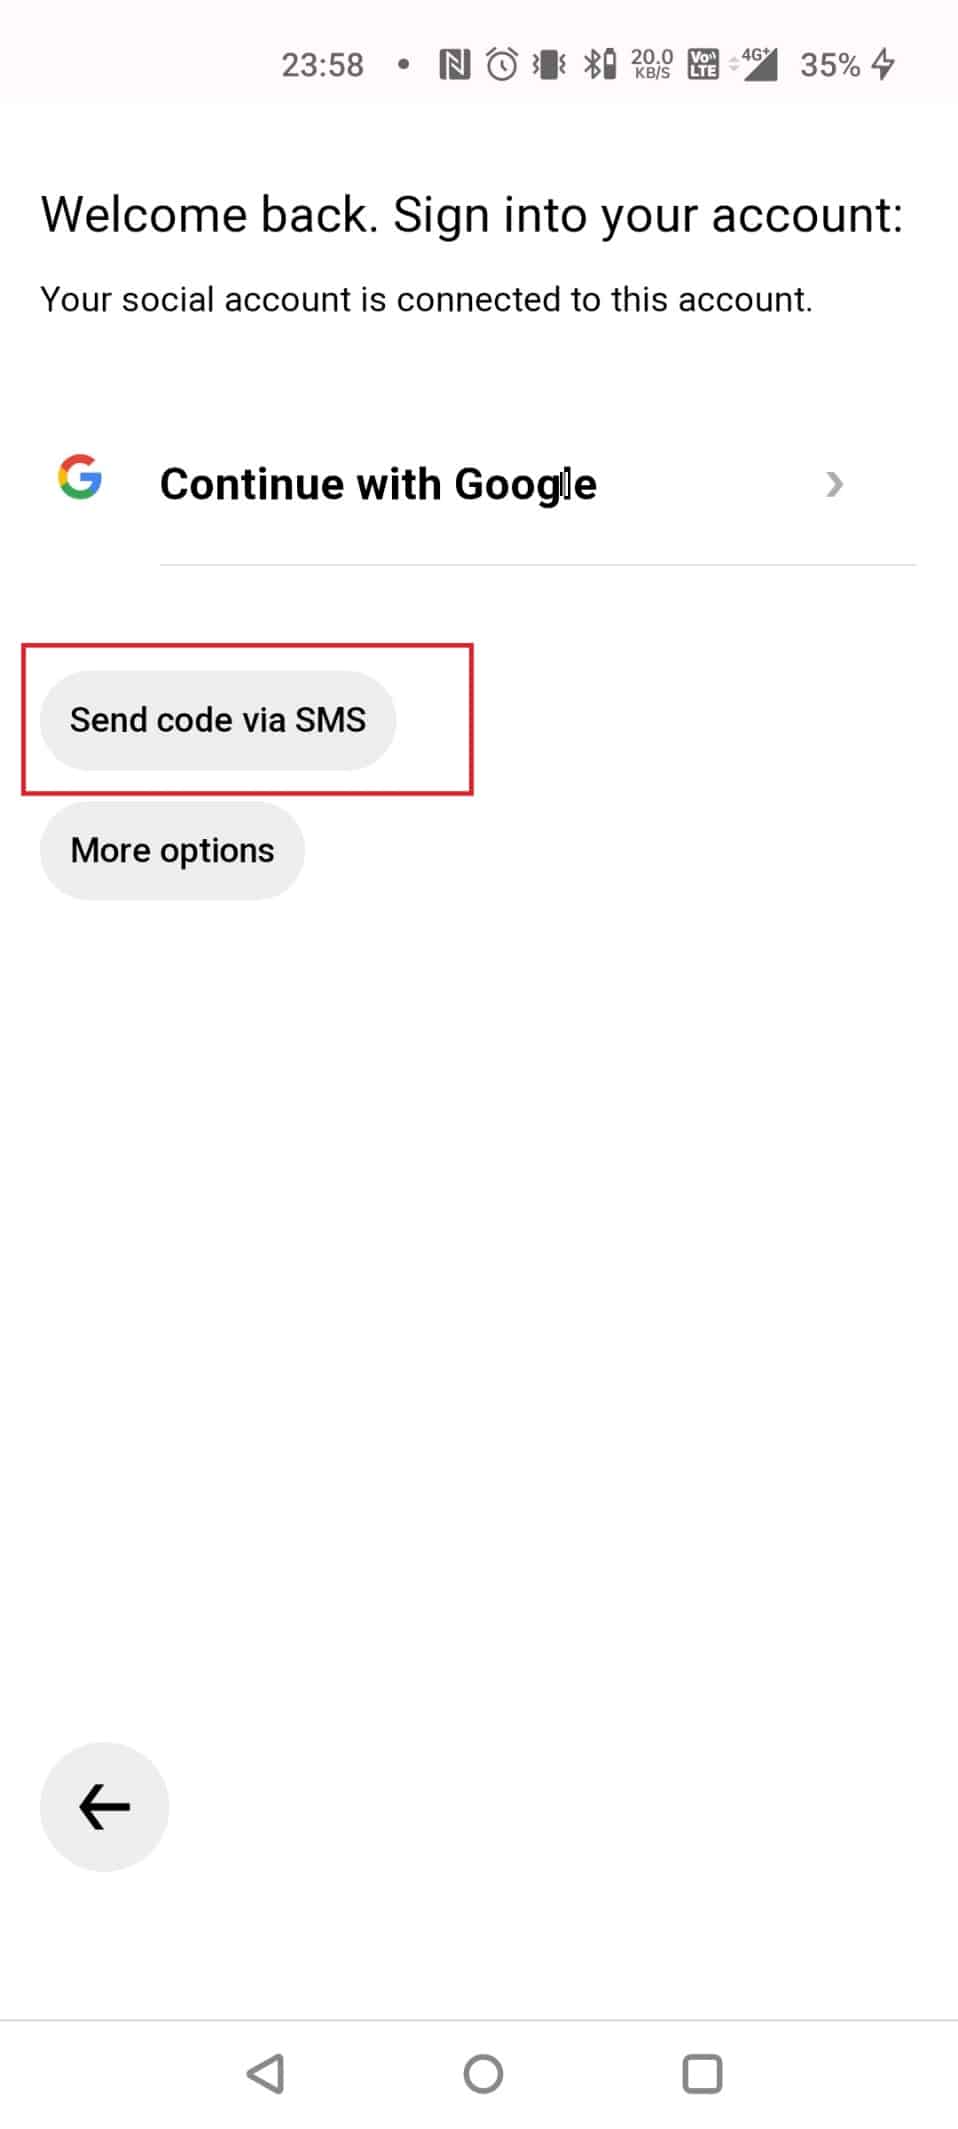 Elija Enviar código por SMS